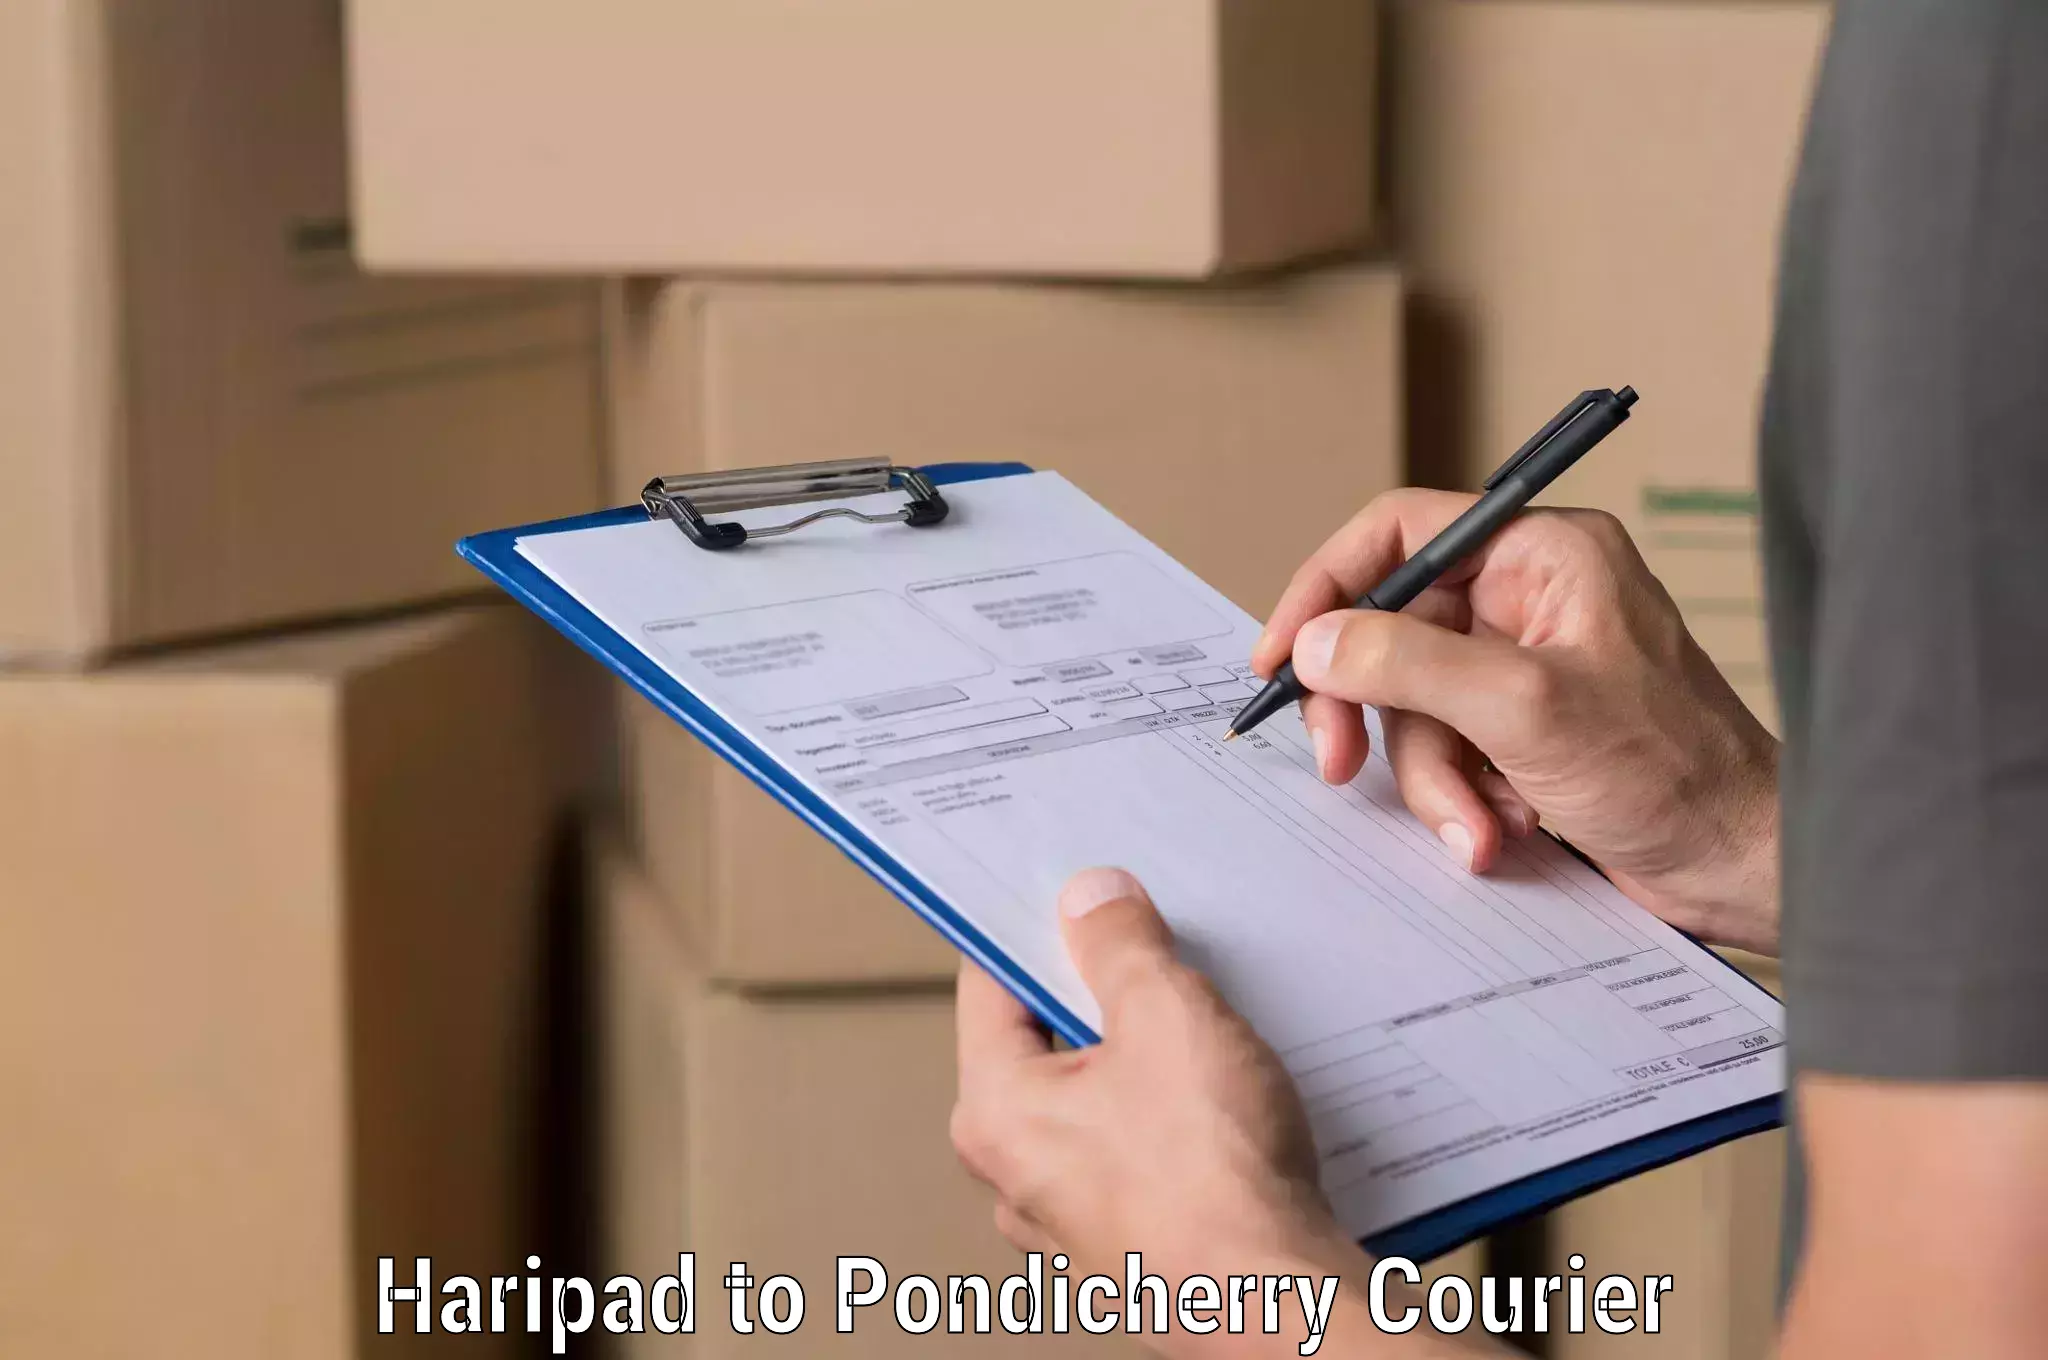 Logistics service provider Haripad to Pondicherry